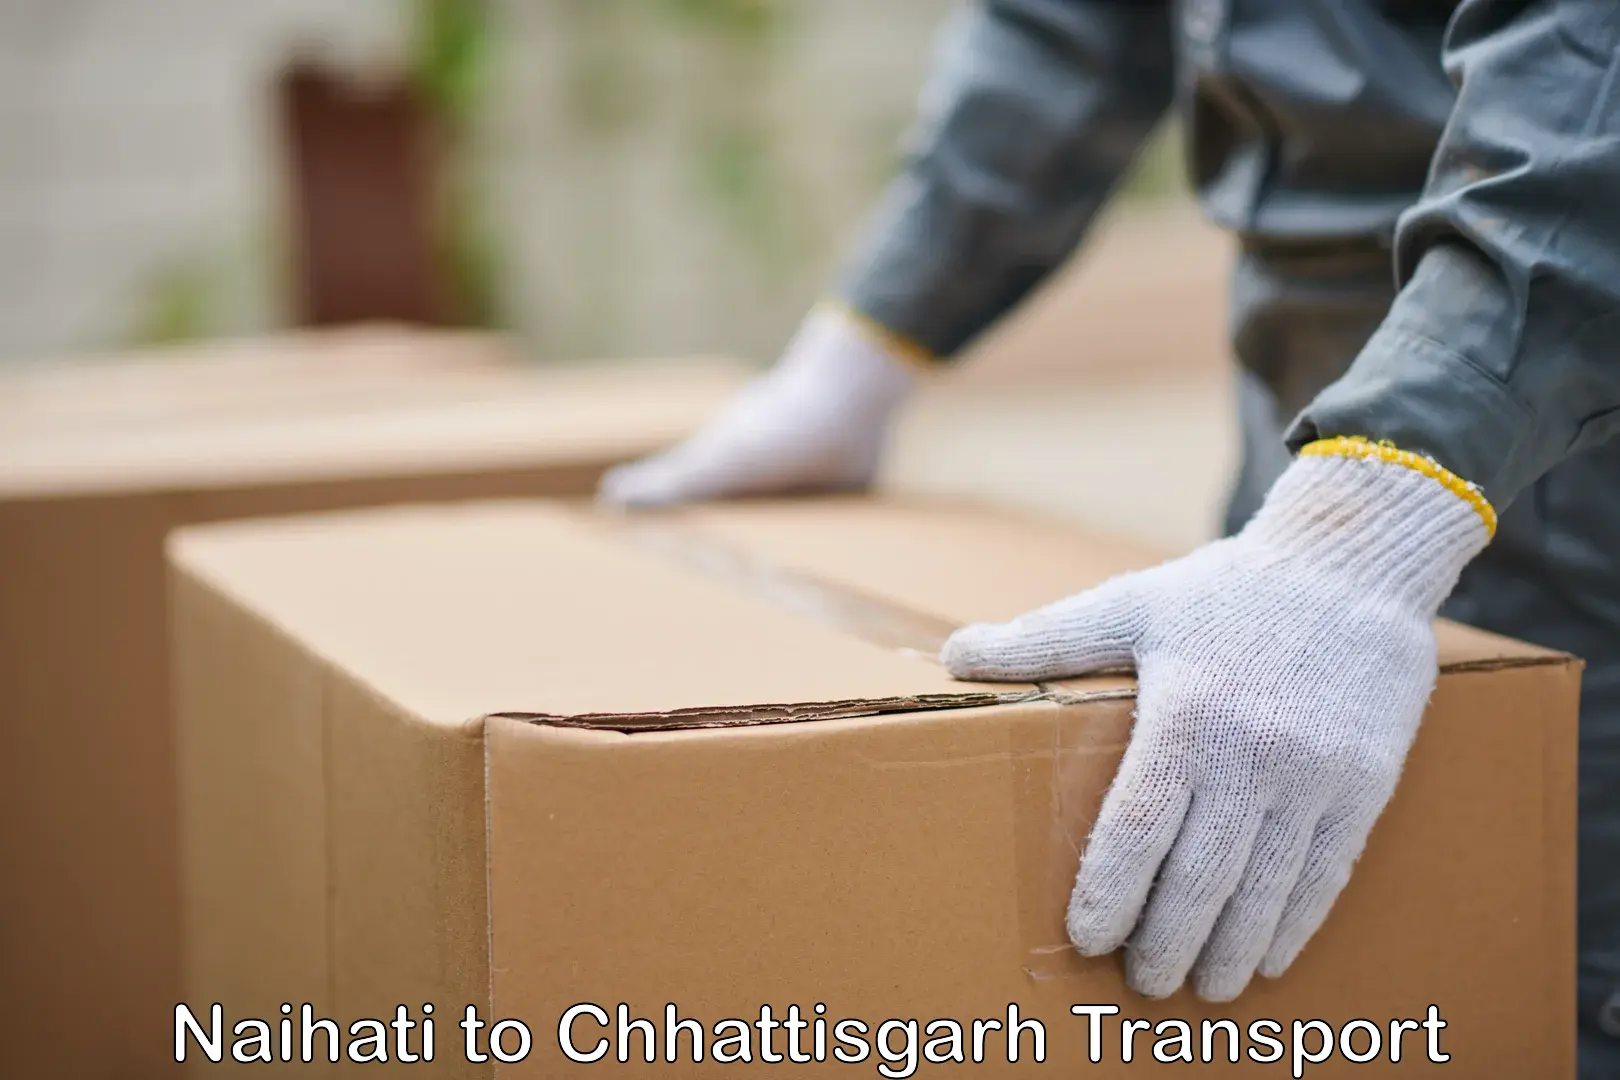 Truck transport companies in India Naihati to Nagri